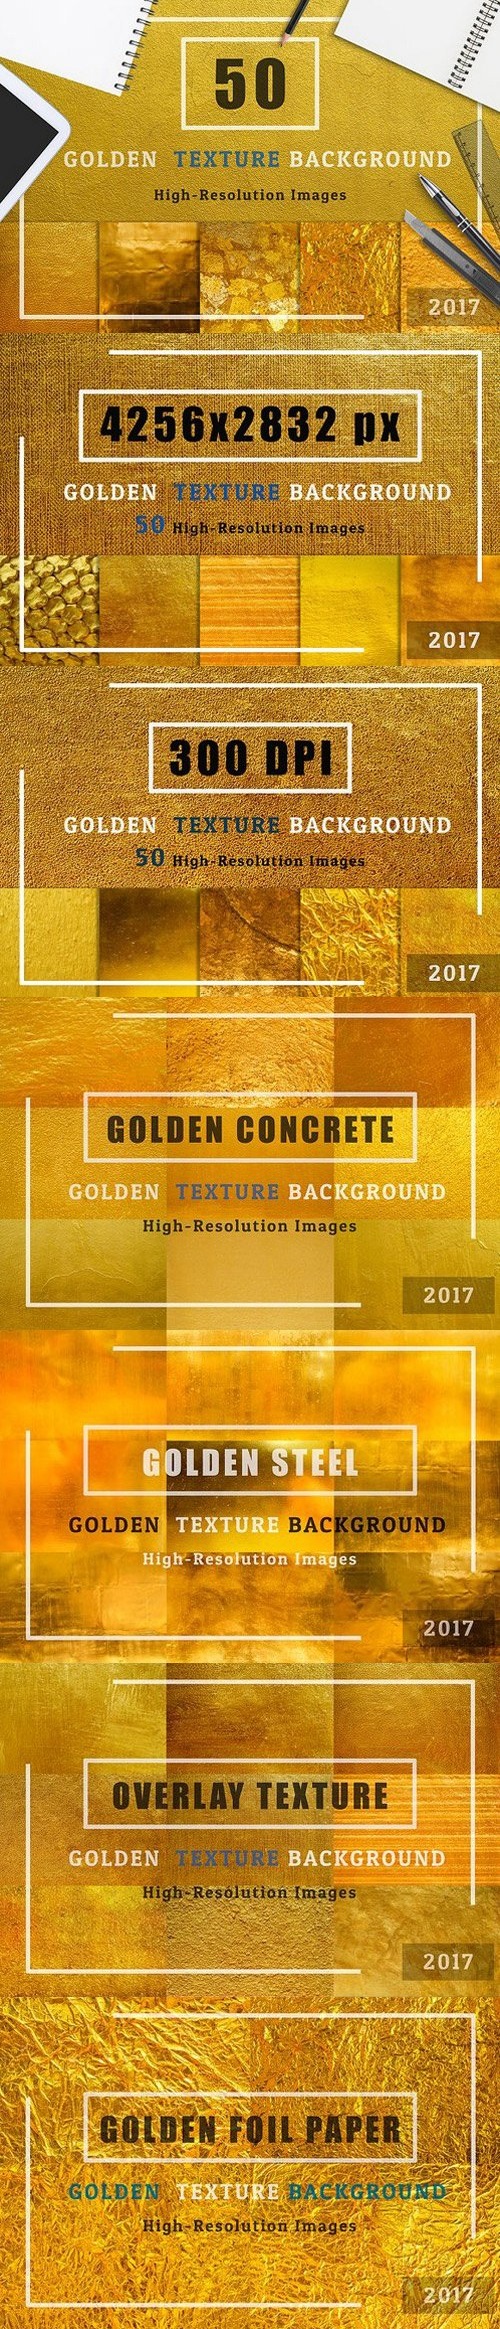 Golden Texture Background Set1 1528205